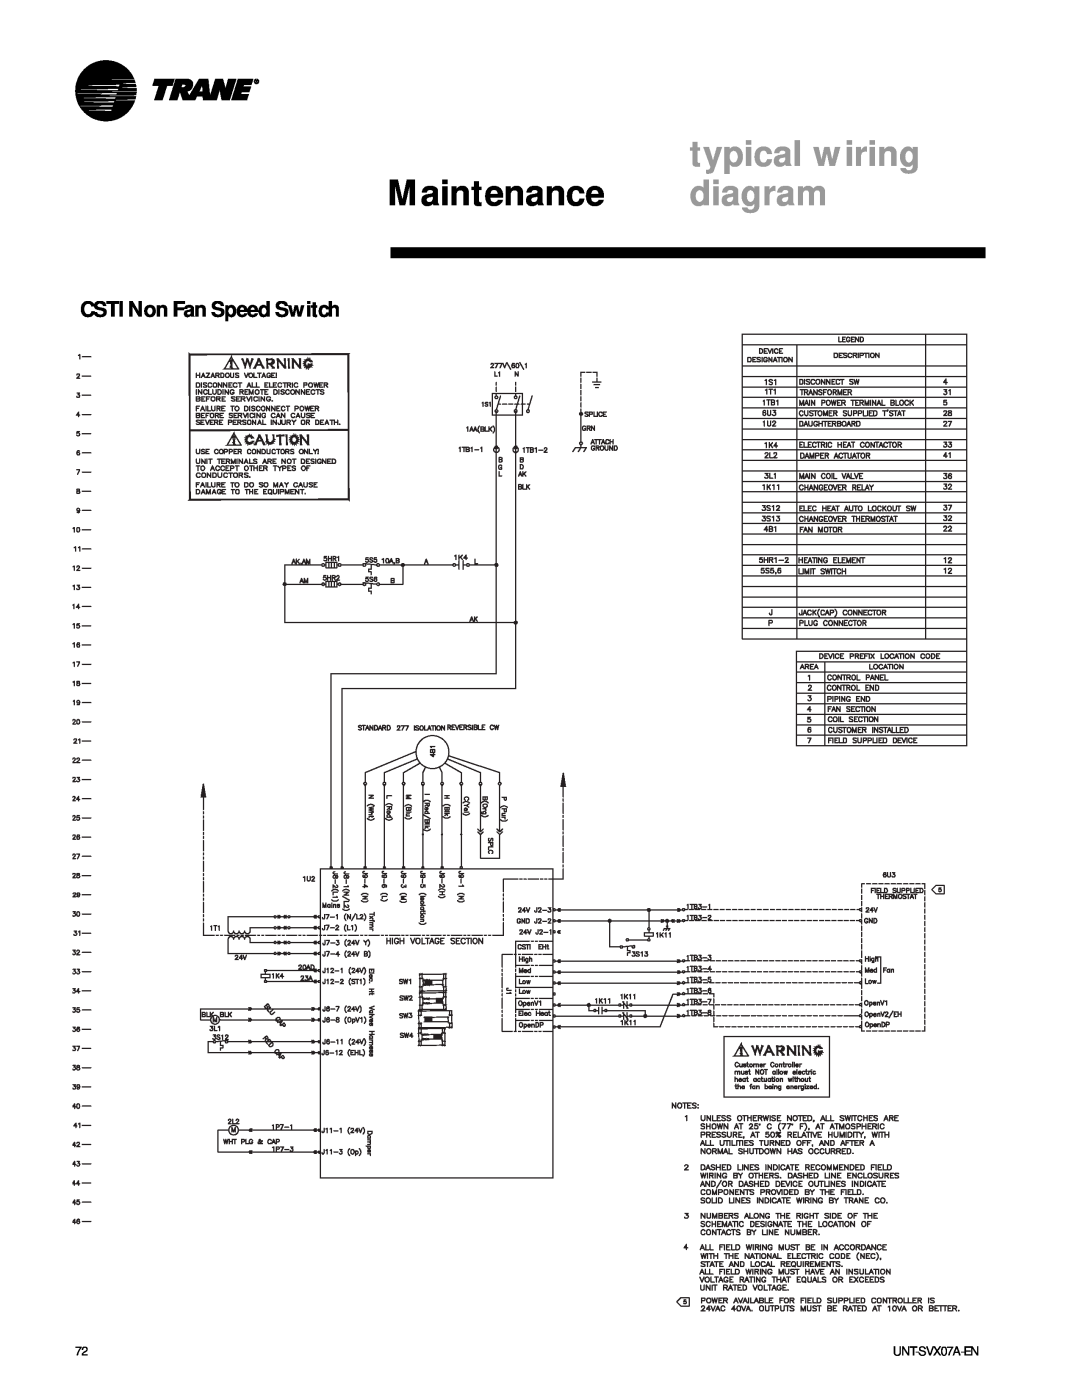 Trane UNT-SVX07A-EN manual CSTI Non Fan Speed Switch, typical wiring, Maintenance diagram 